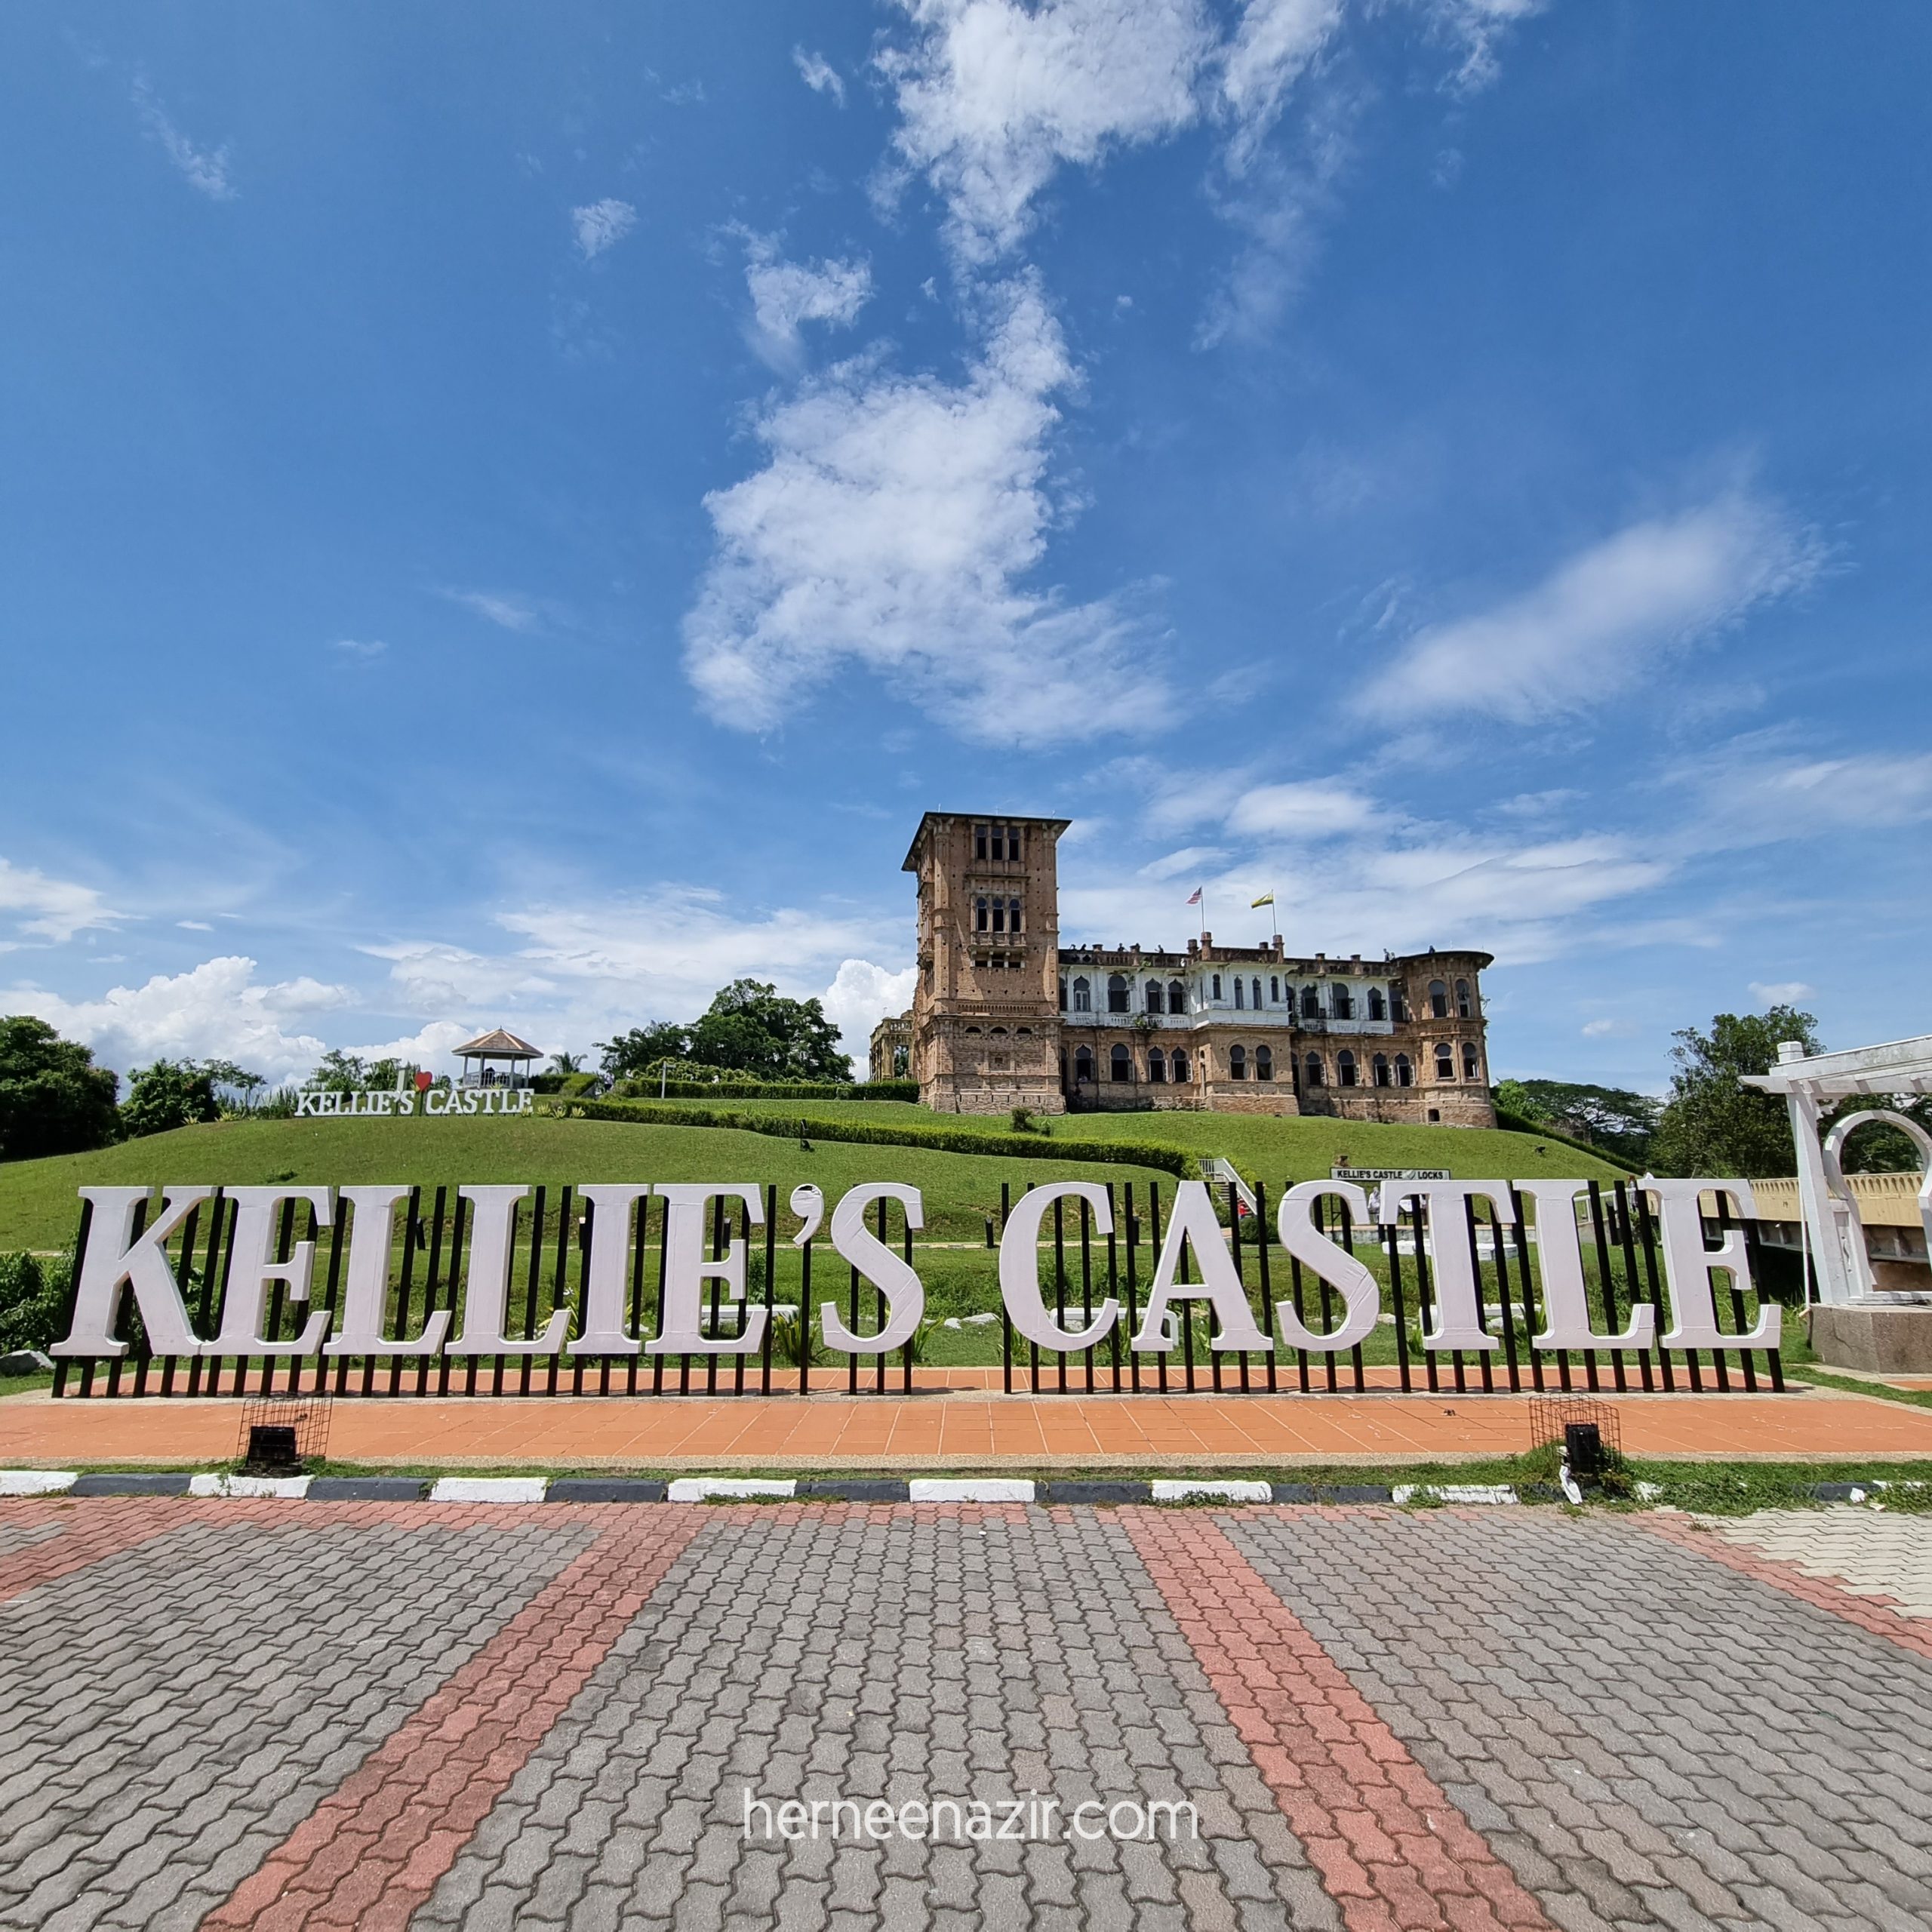 Wordless Wednesday -Kellie’s Castle